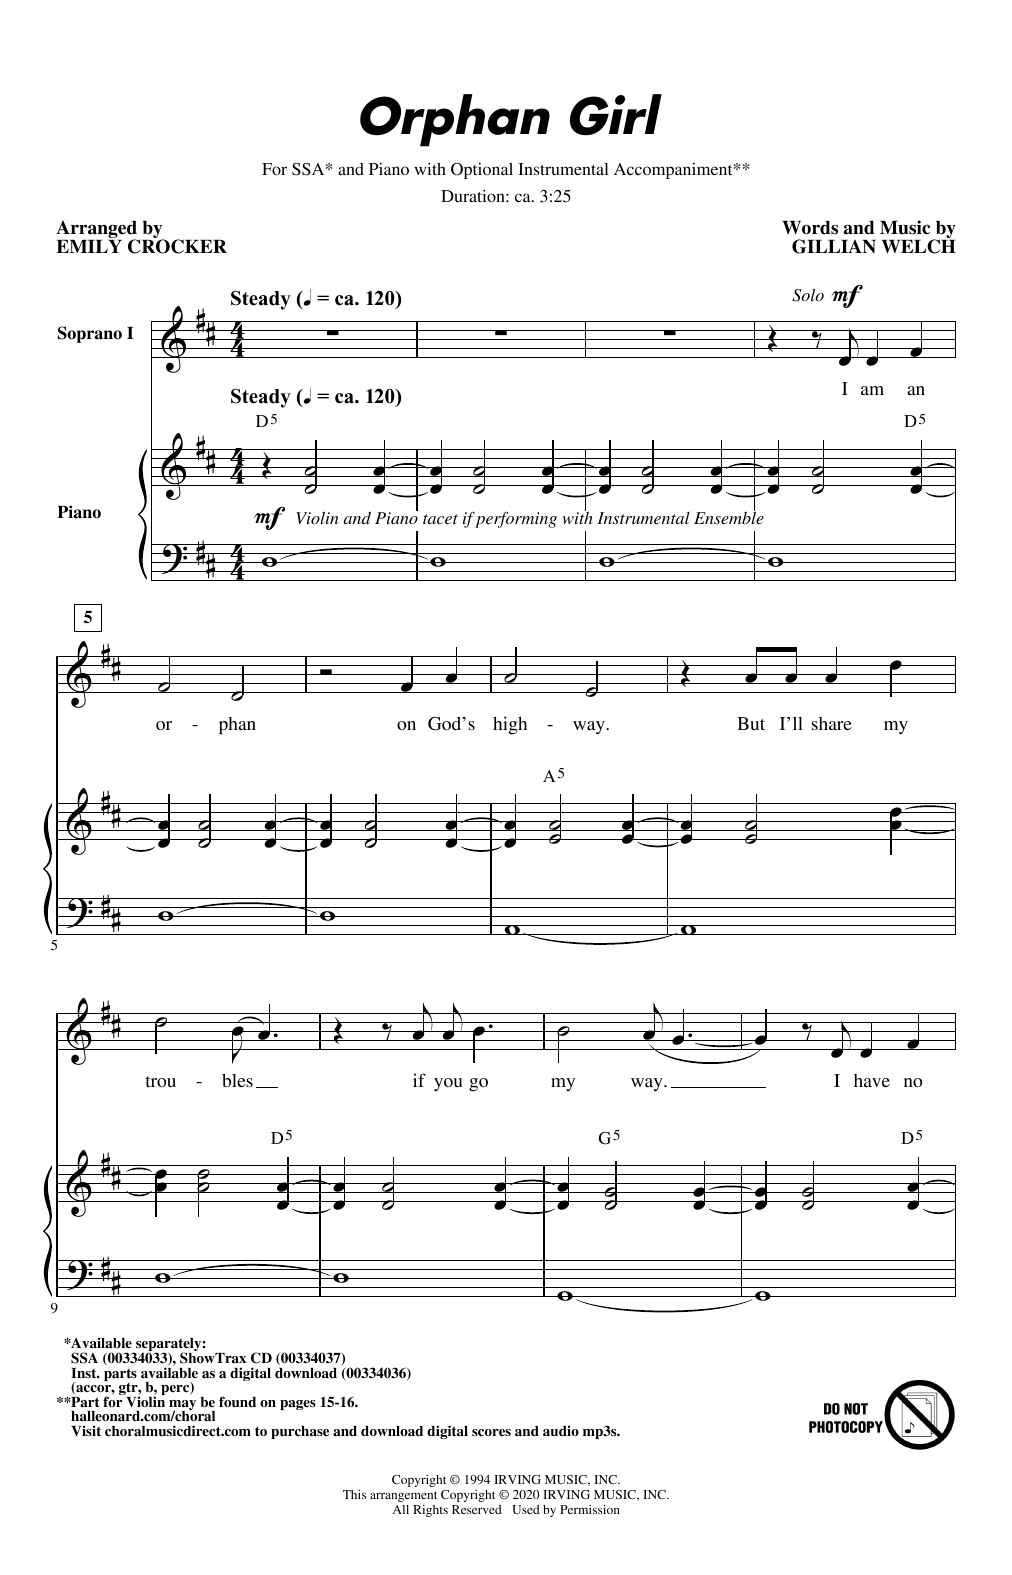 Gillian Welch Orphan Girl (arr. Emily Crocker) Sheet Music Notes & Chords for SSA Choir - Download or Print PDF